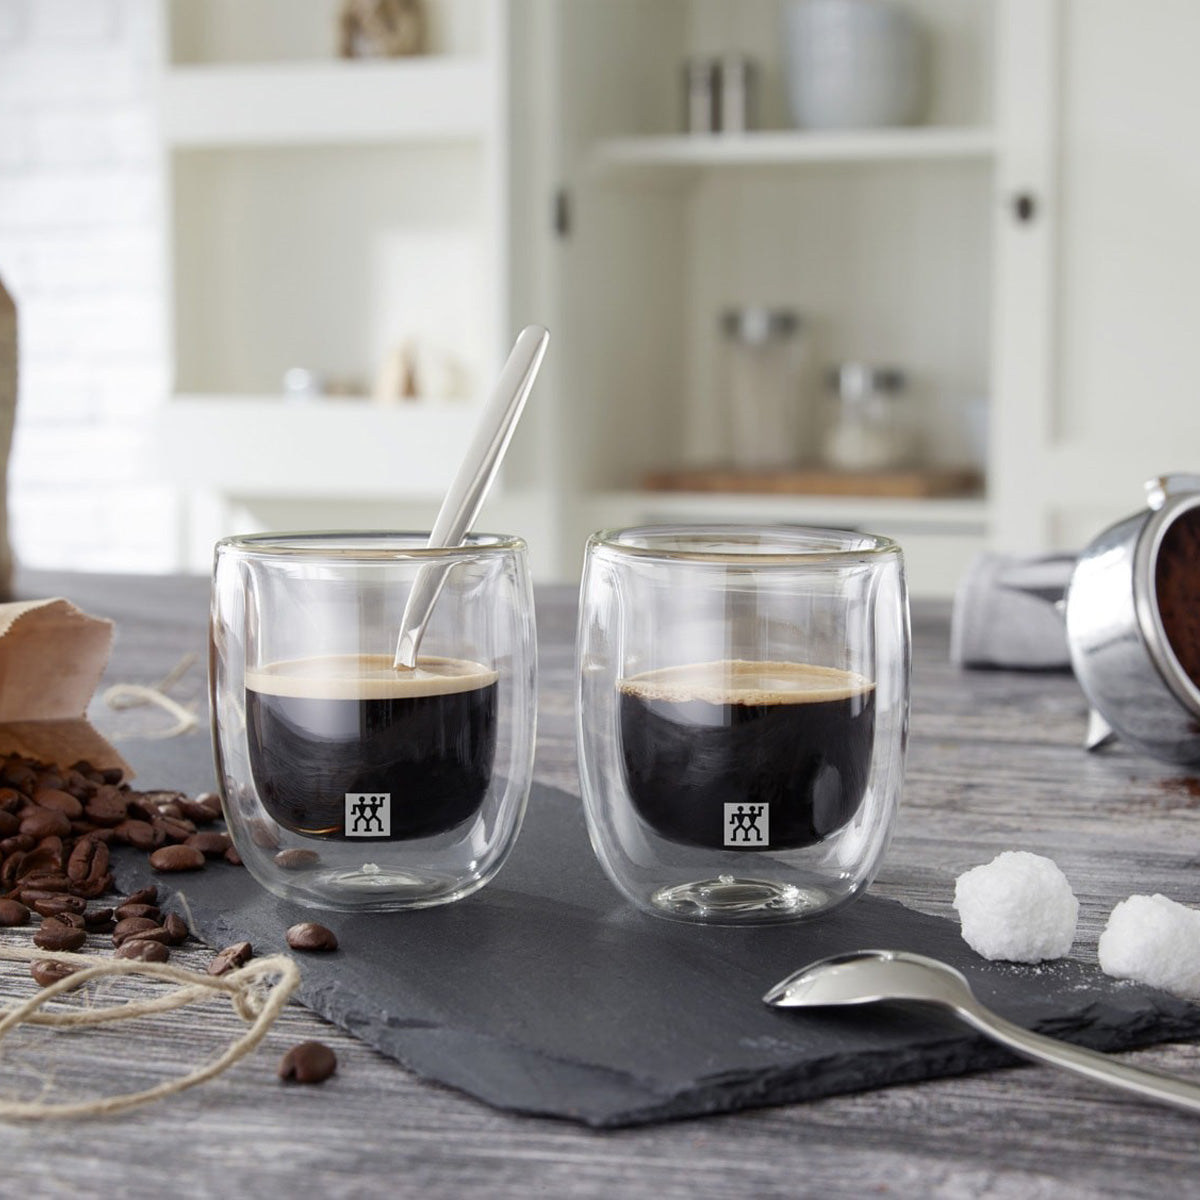 ZWILLING Sorrento Cappuccino Mugs - Set of 2, 450 mL